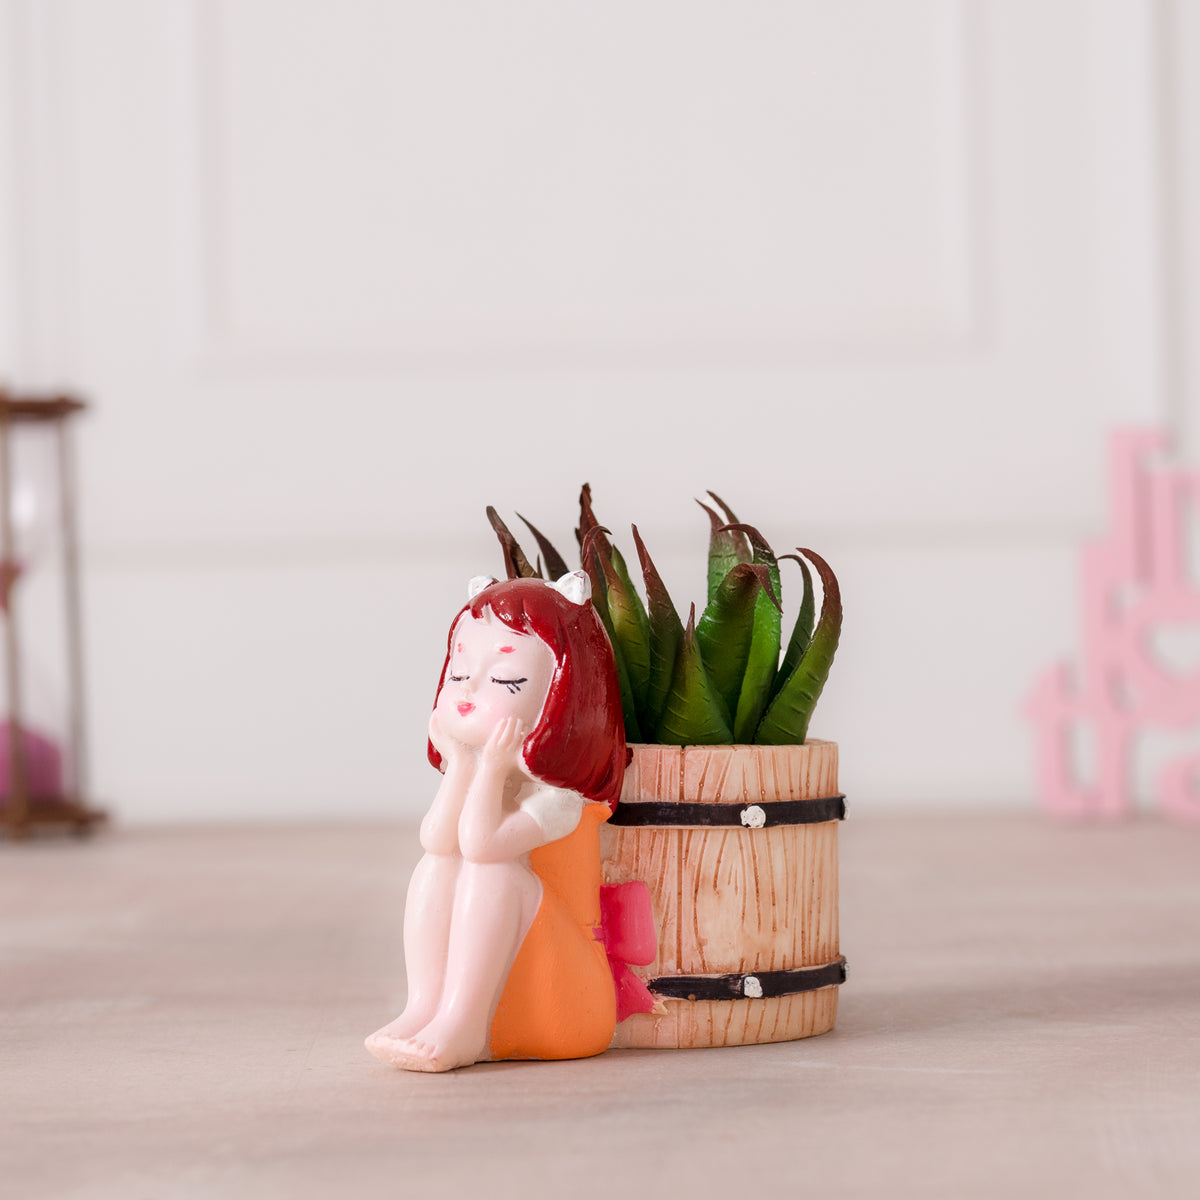 Cute Orange Basket Girl Succulent Planter with Plants For Home Garden Office Desktop